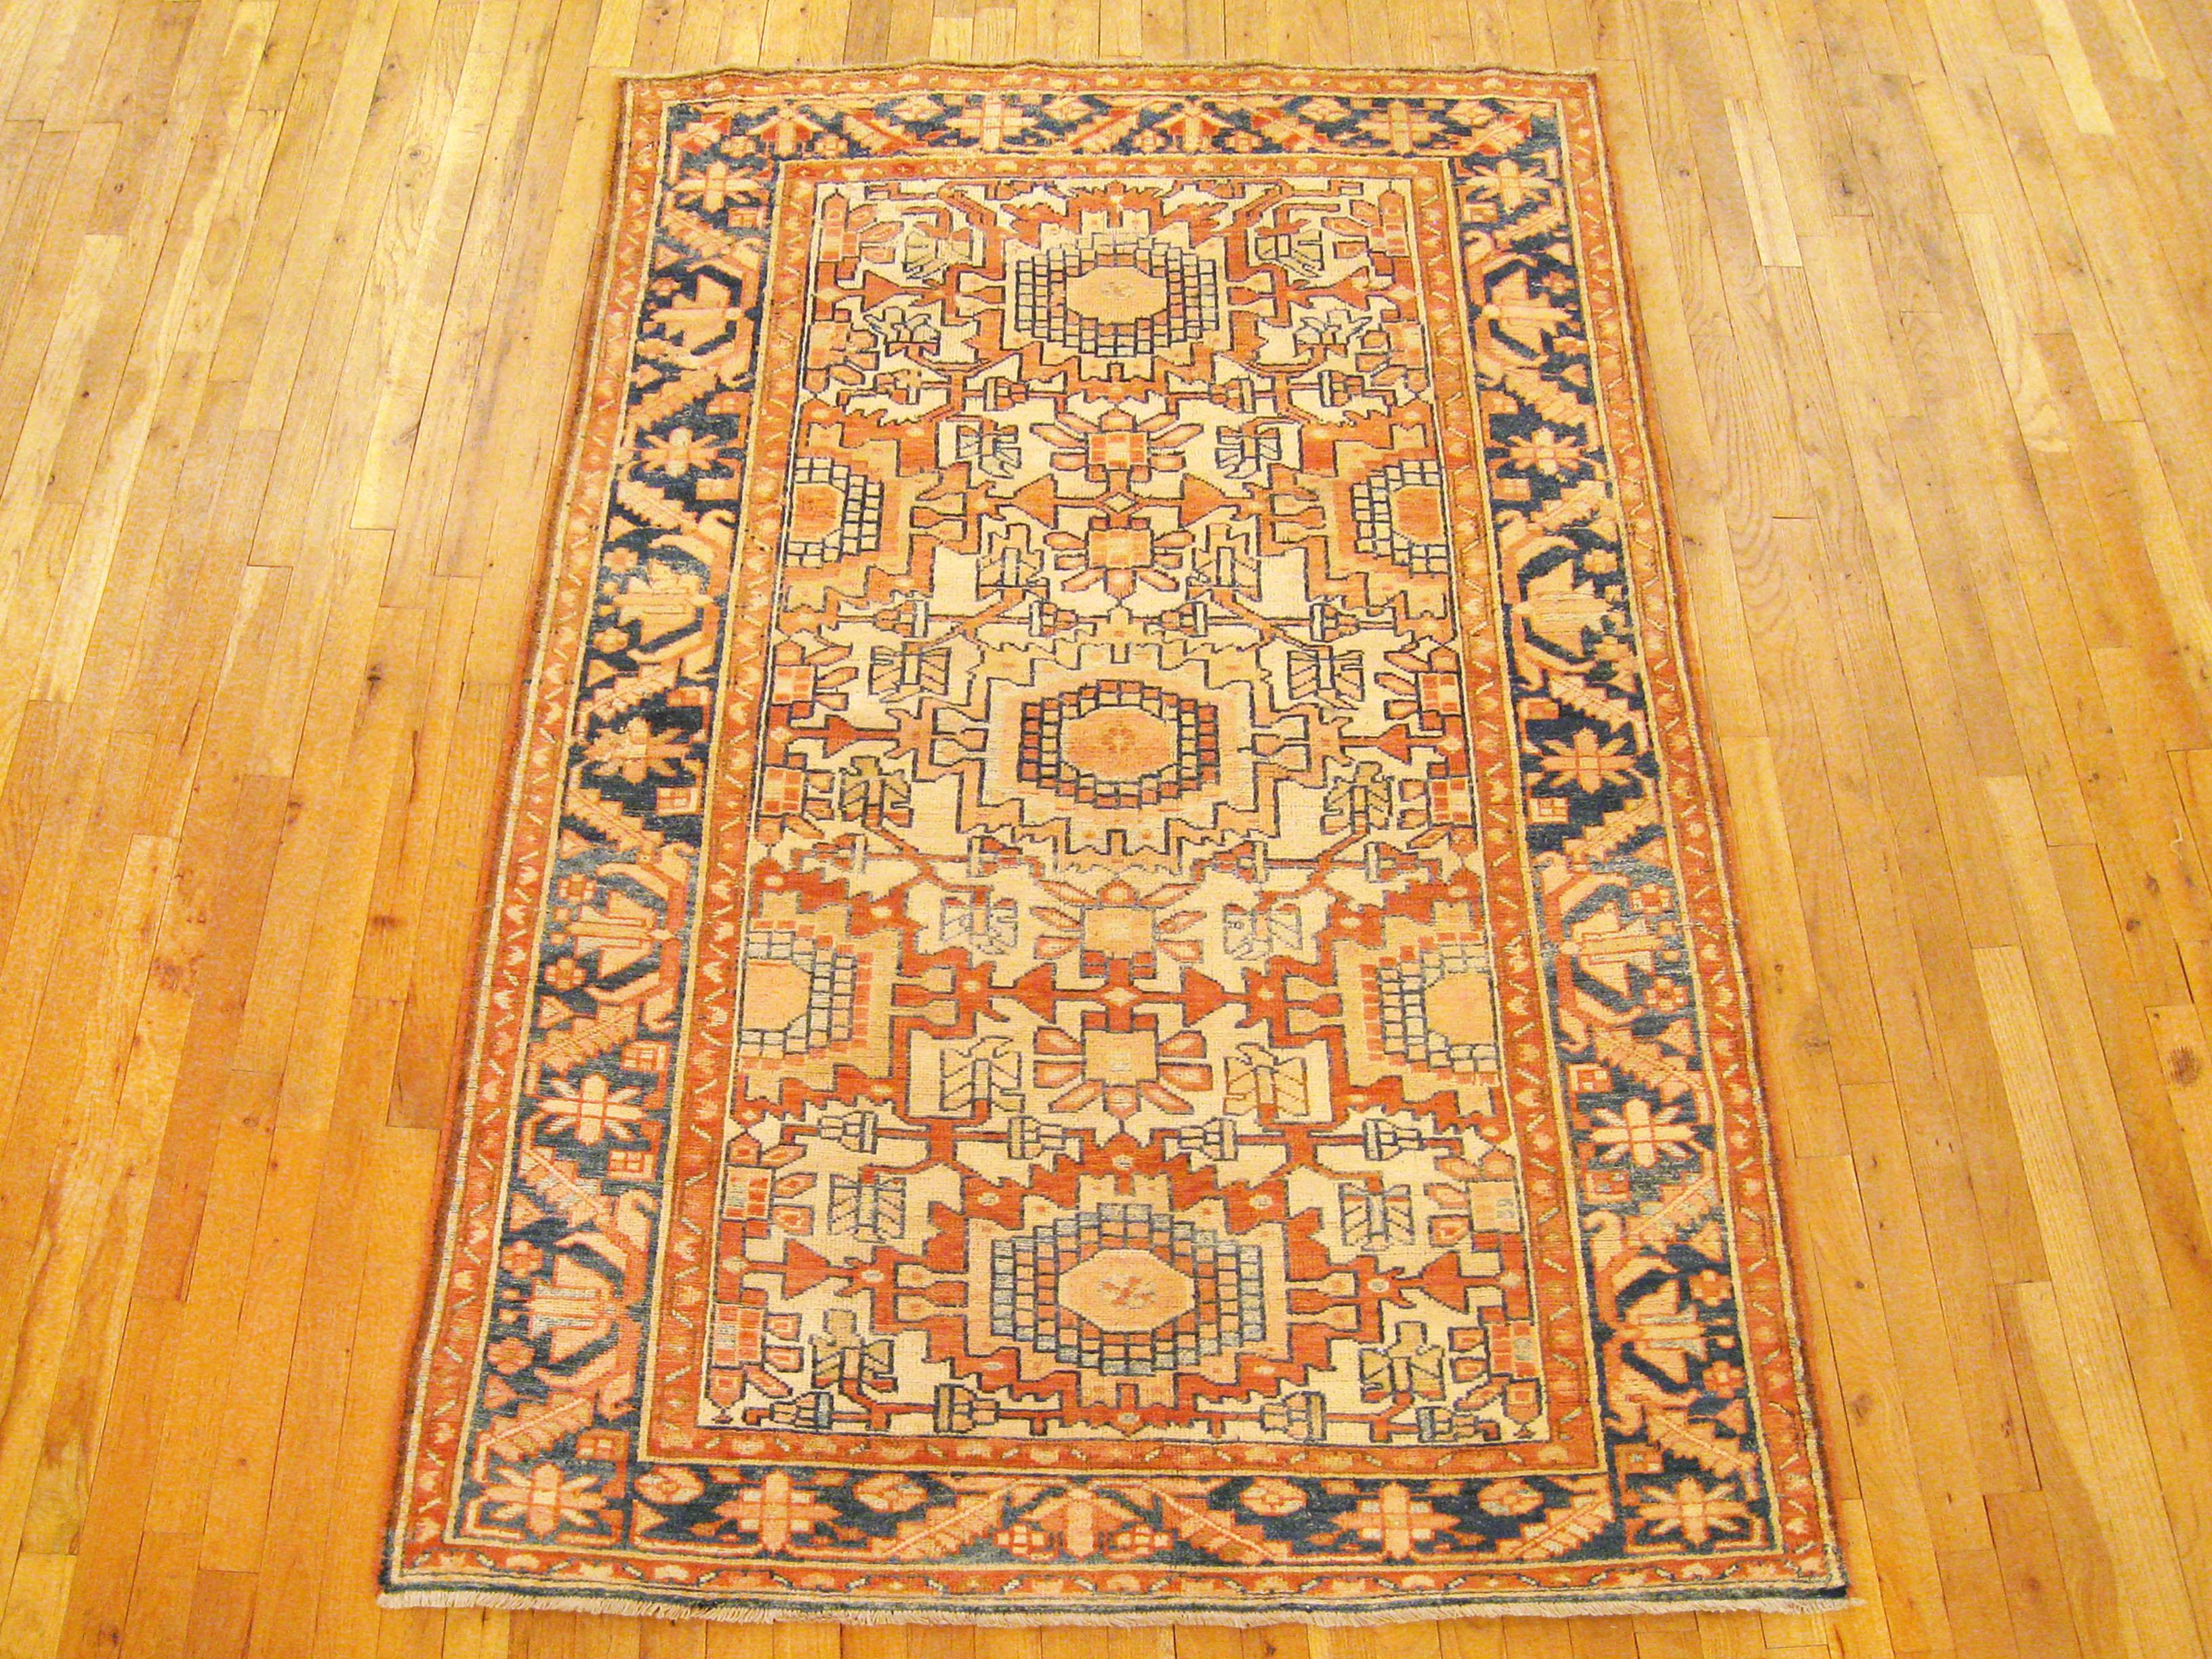 Vintage Persian Hamadan oriental rug, small size

A vintage Persian Hamadan oriental rug in small size, size 6'8